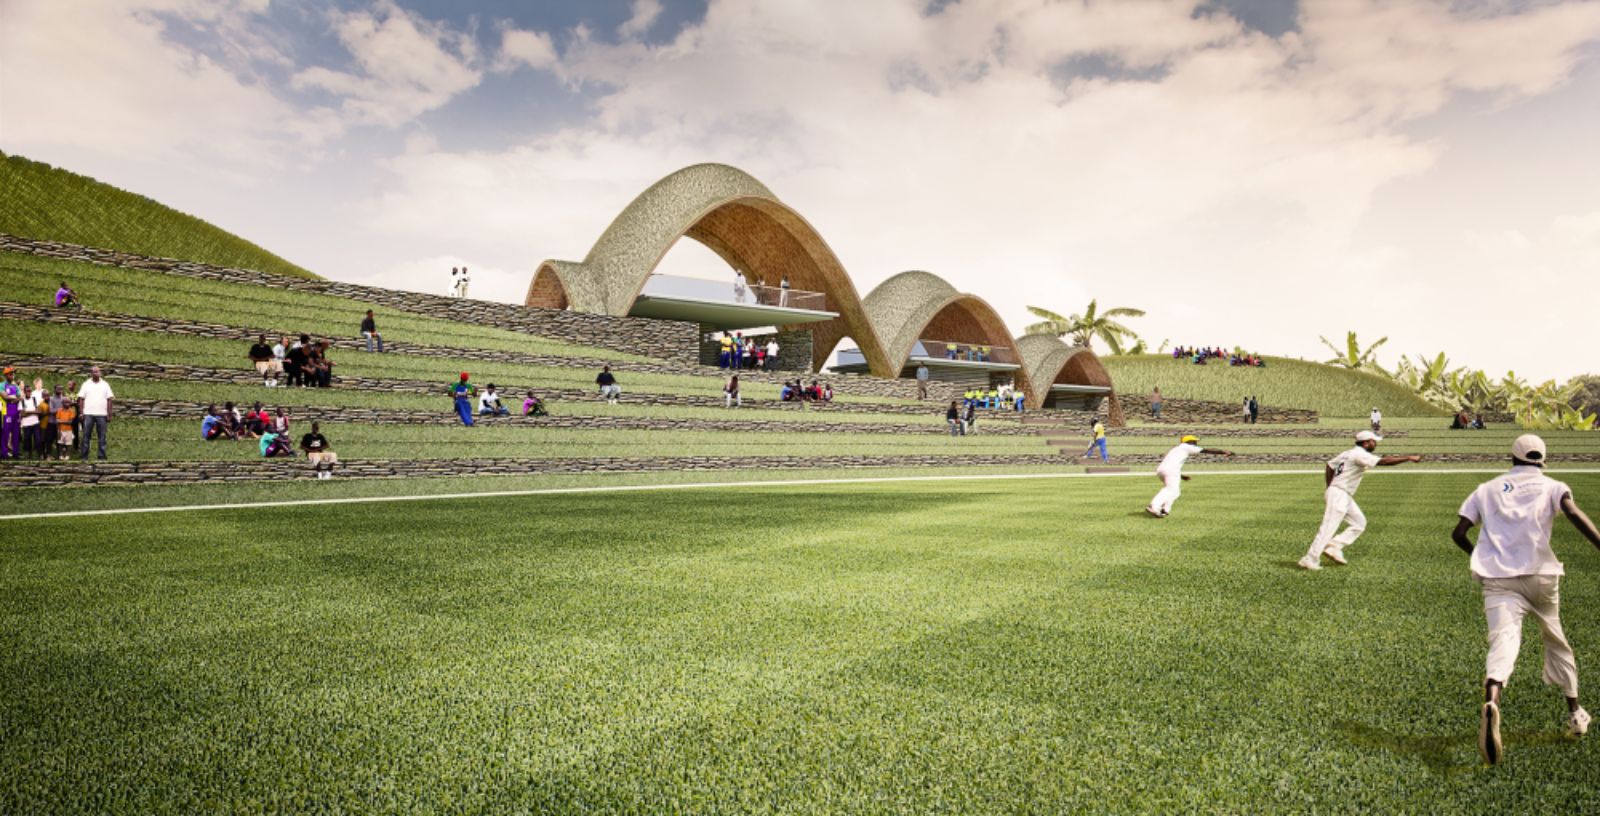 The Rwanda Cricket Stadium